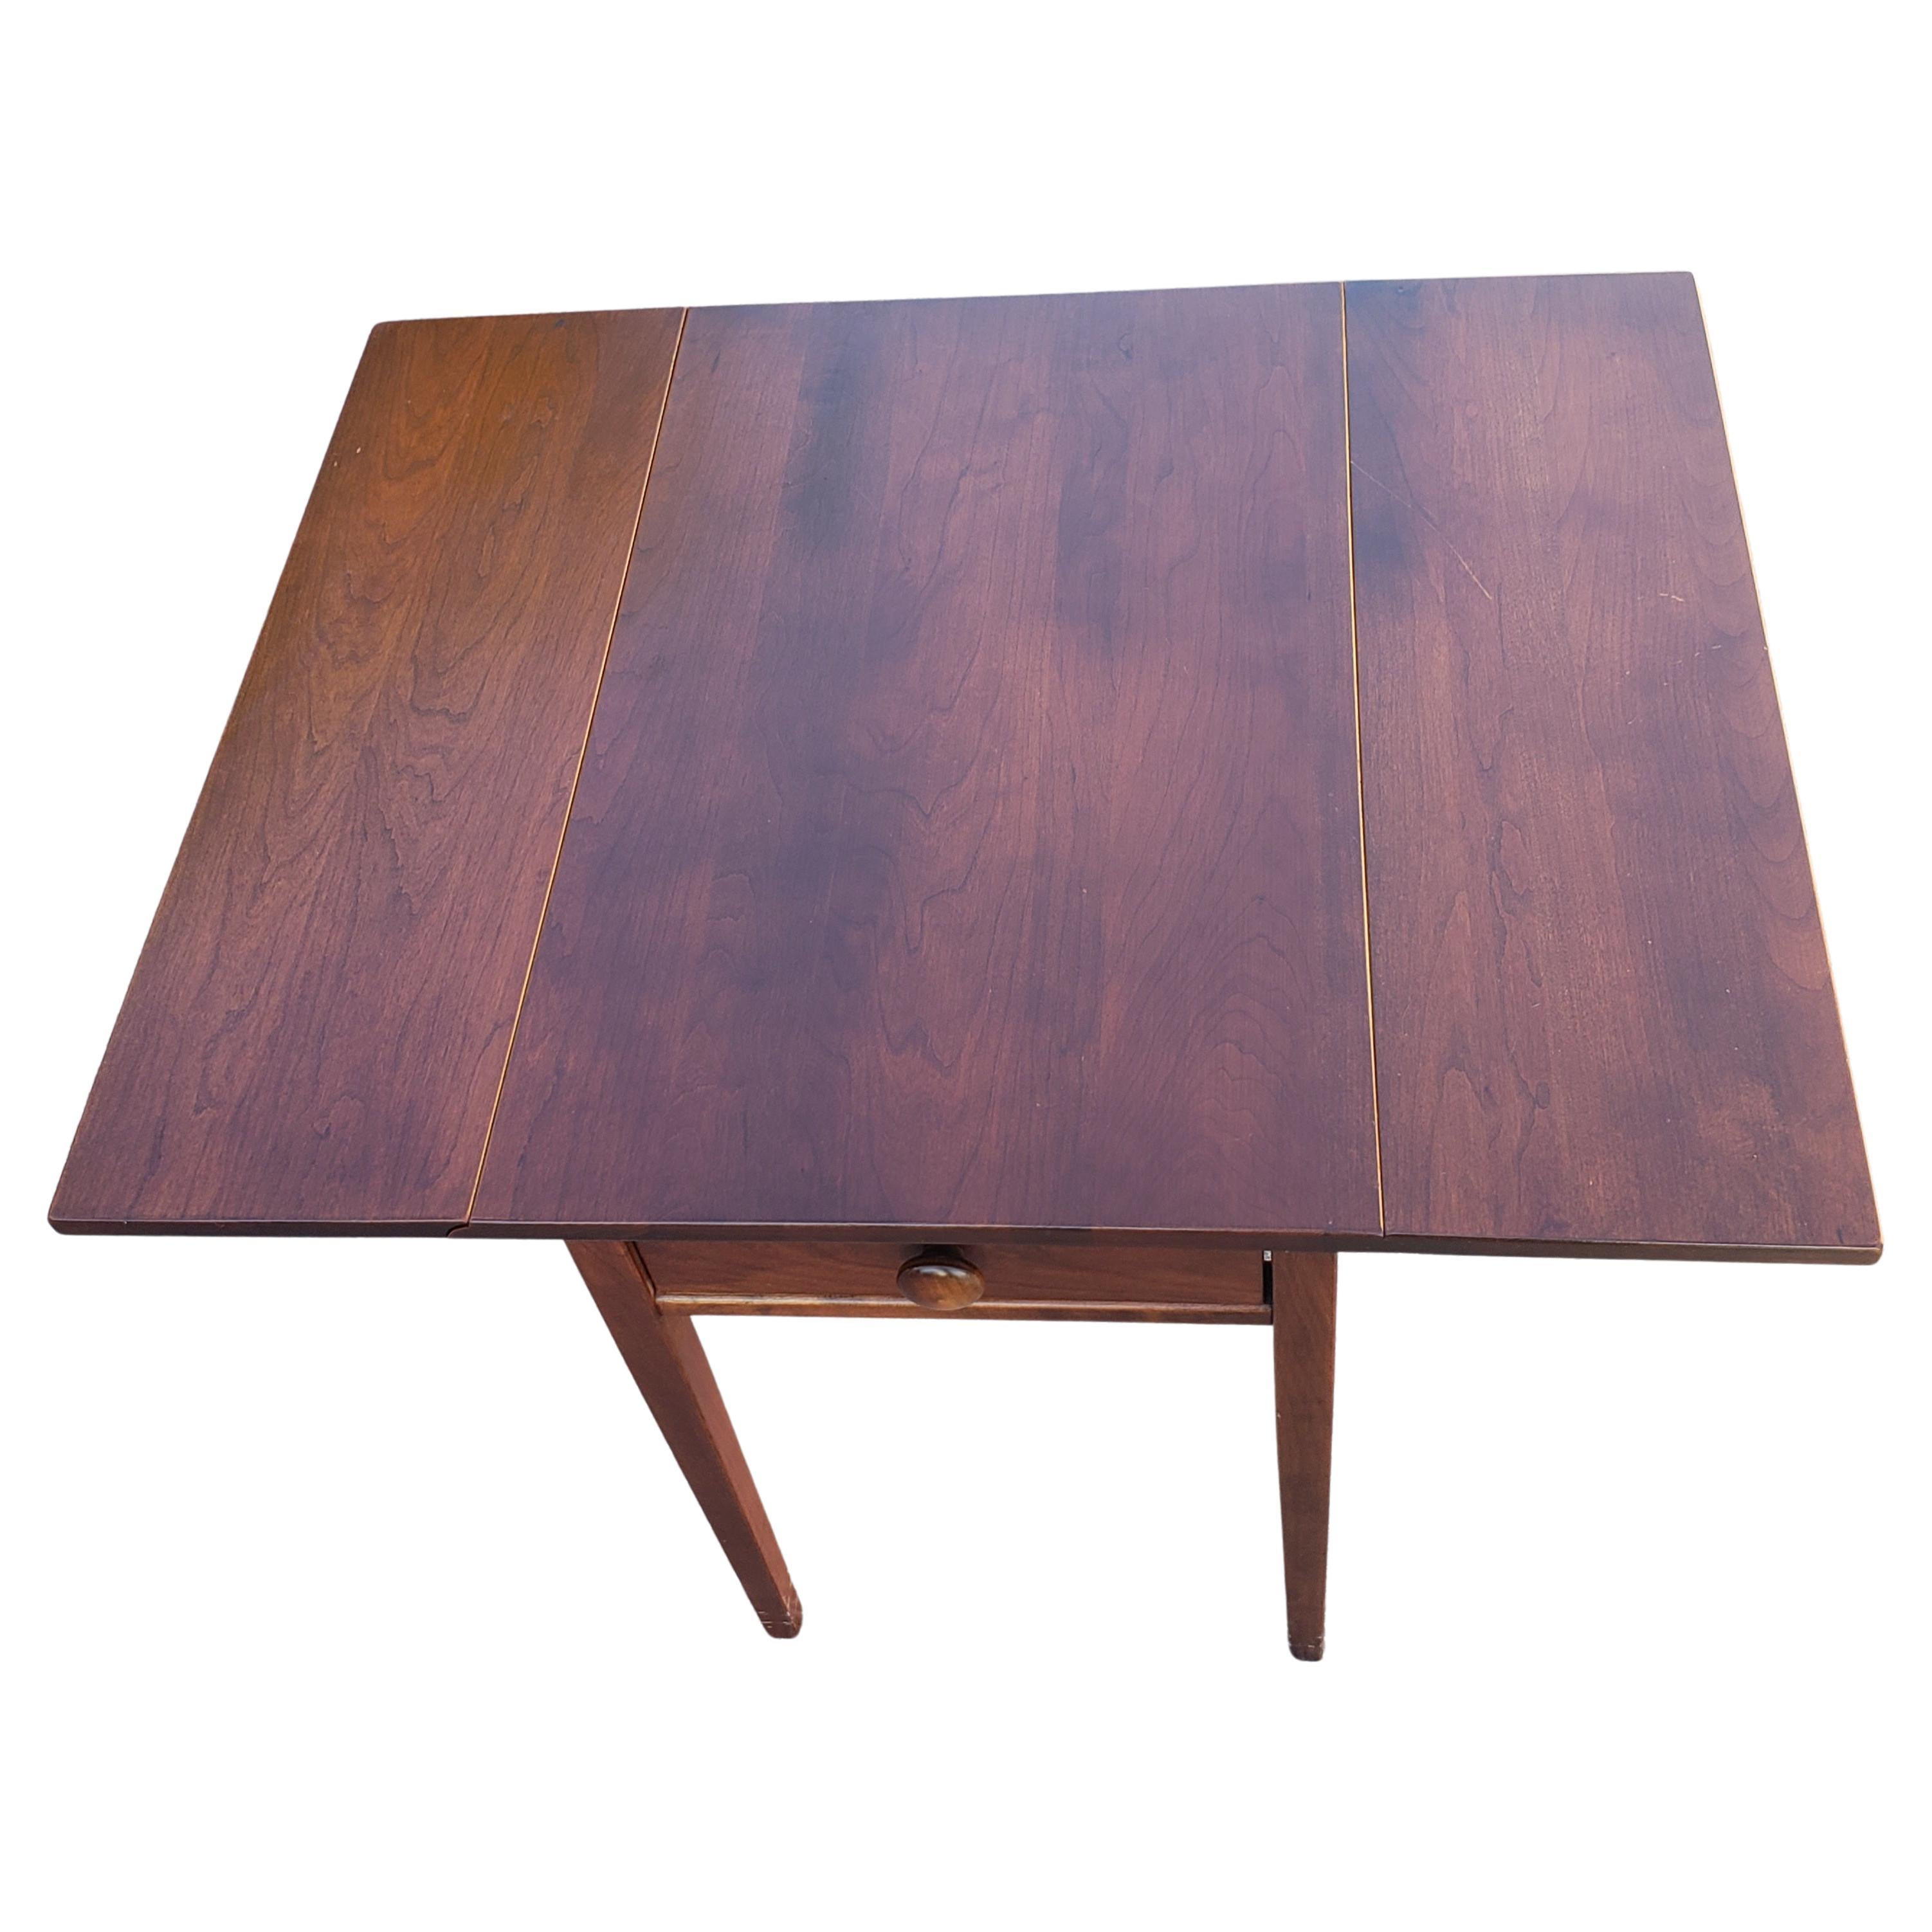 A 1970s vintage drop-leaf Pembroke side table in solid cherry.
Measures 32